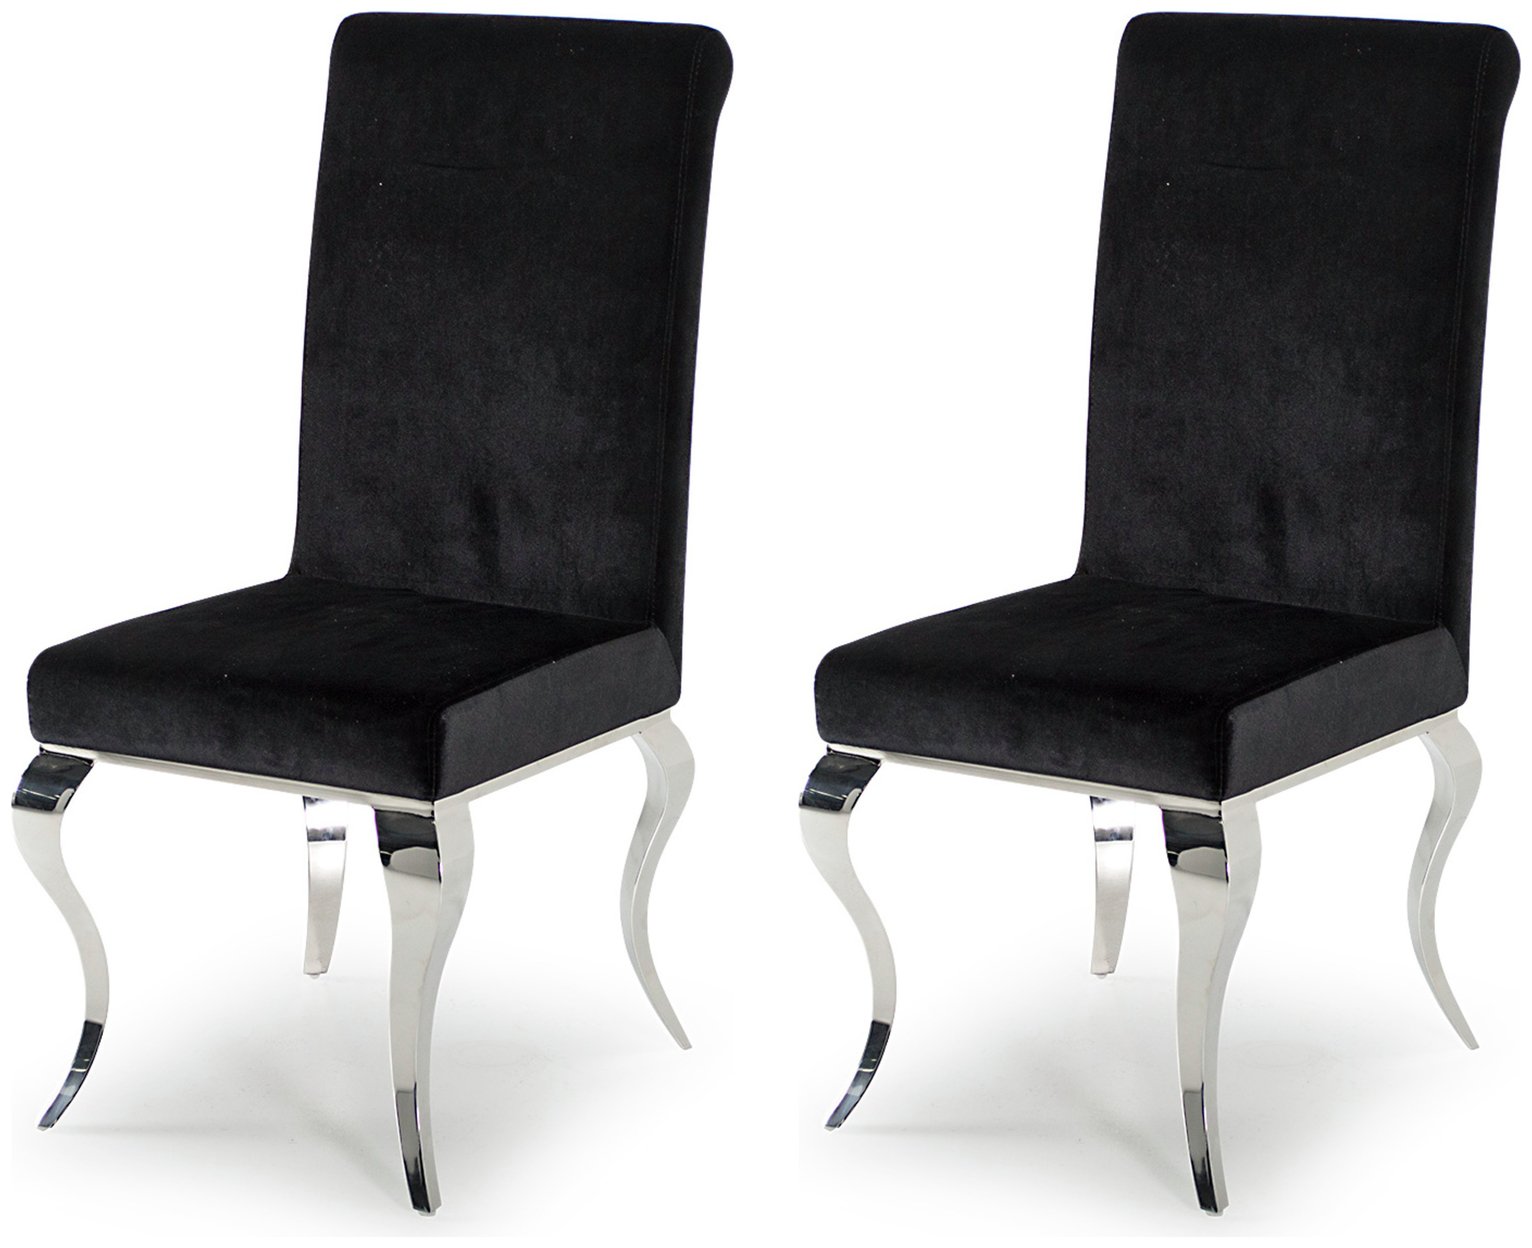 Furnoko Louis Pair of Fabric Dining Chairs - Black